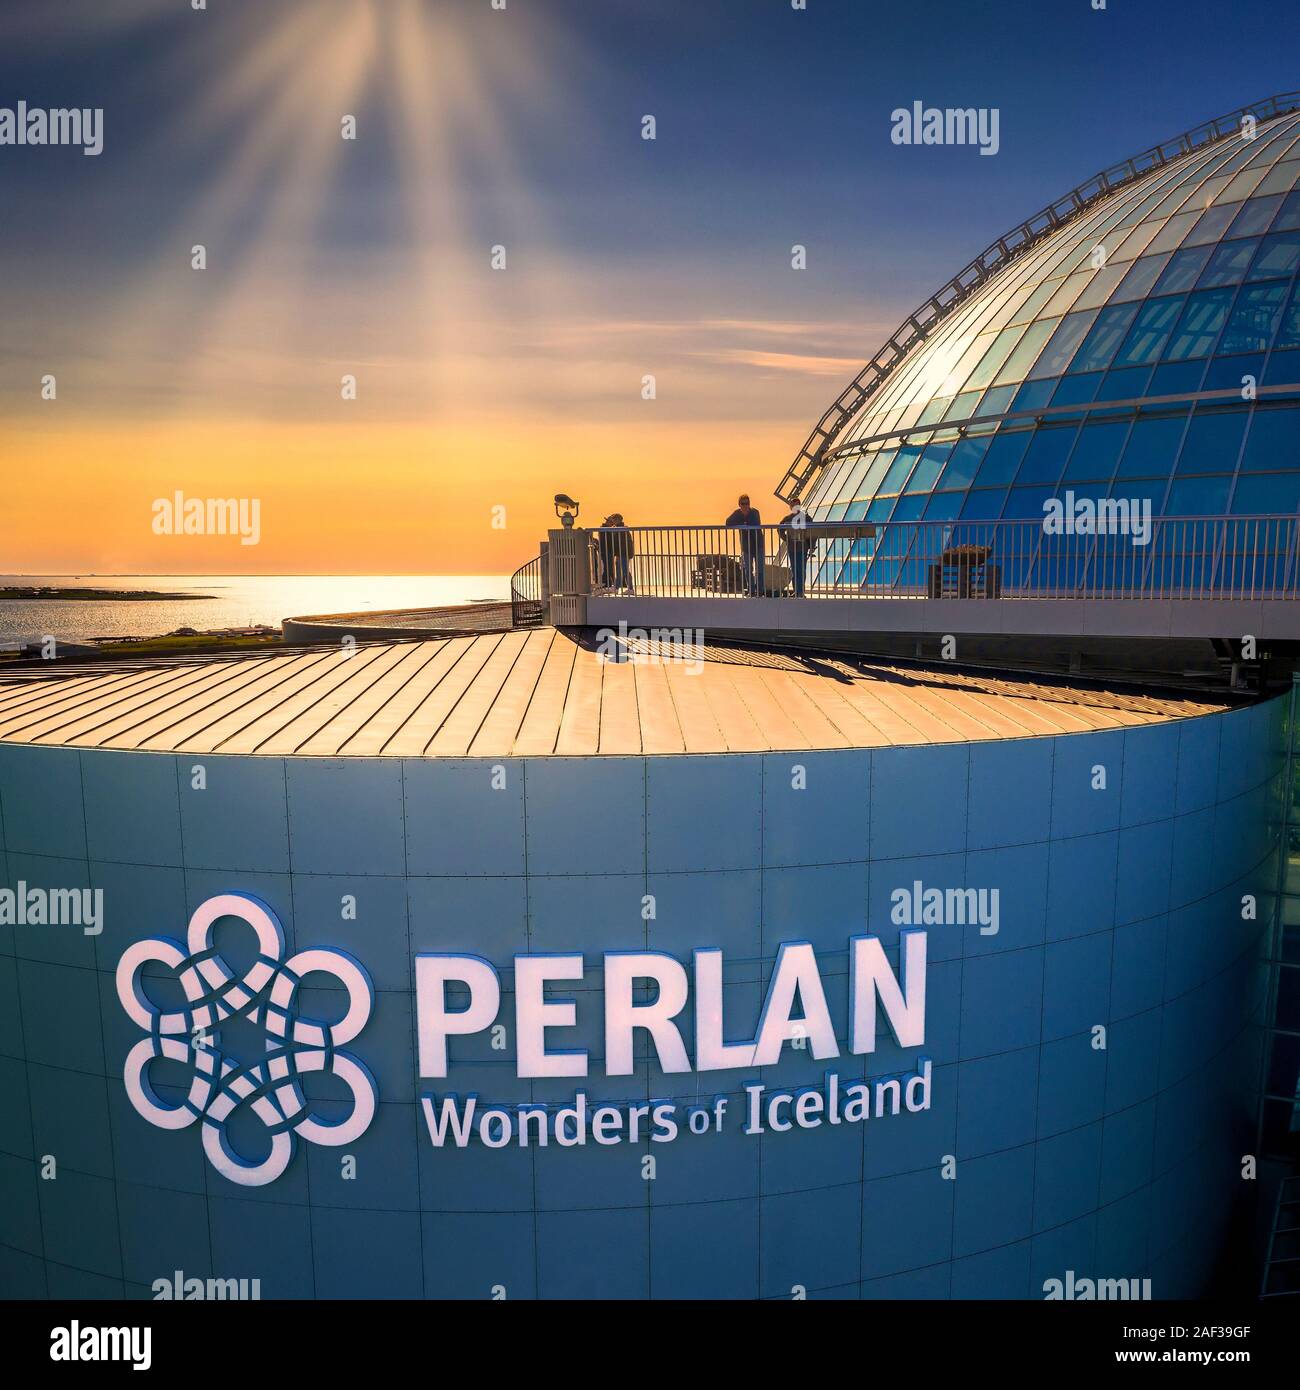 Perlan (The Pearl) Museum, Reykjavik, Iceland Stock Photo